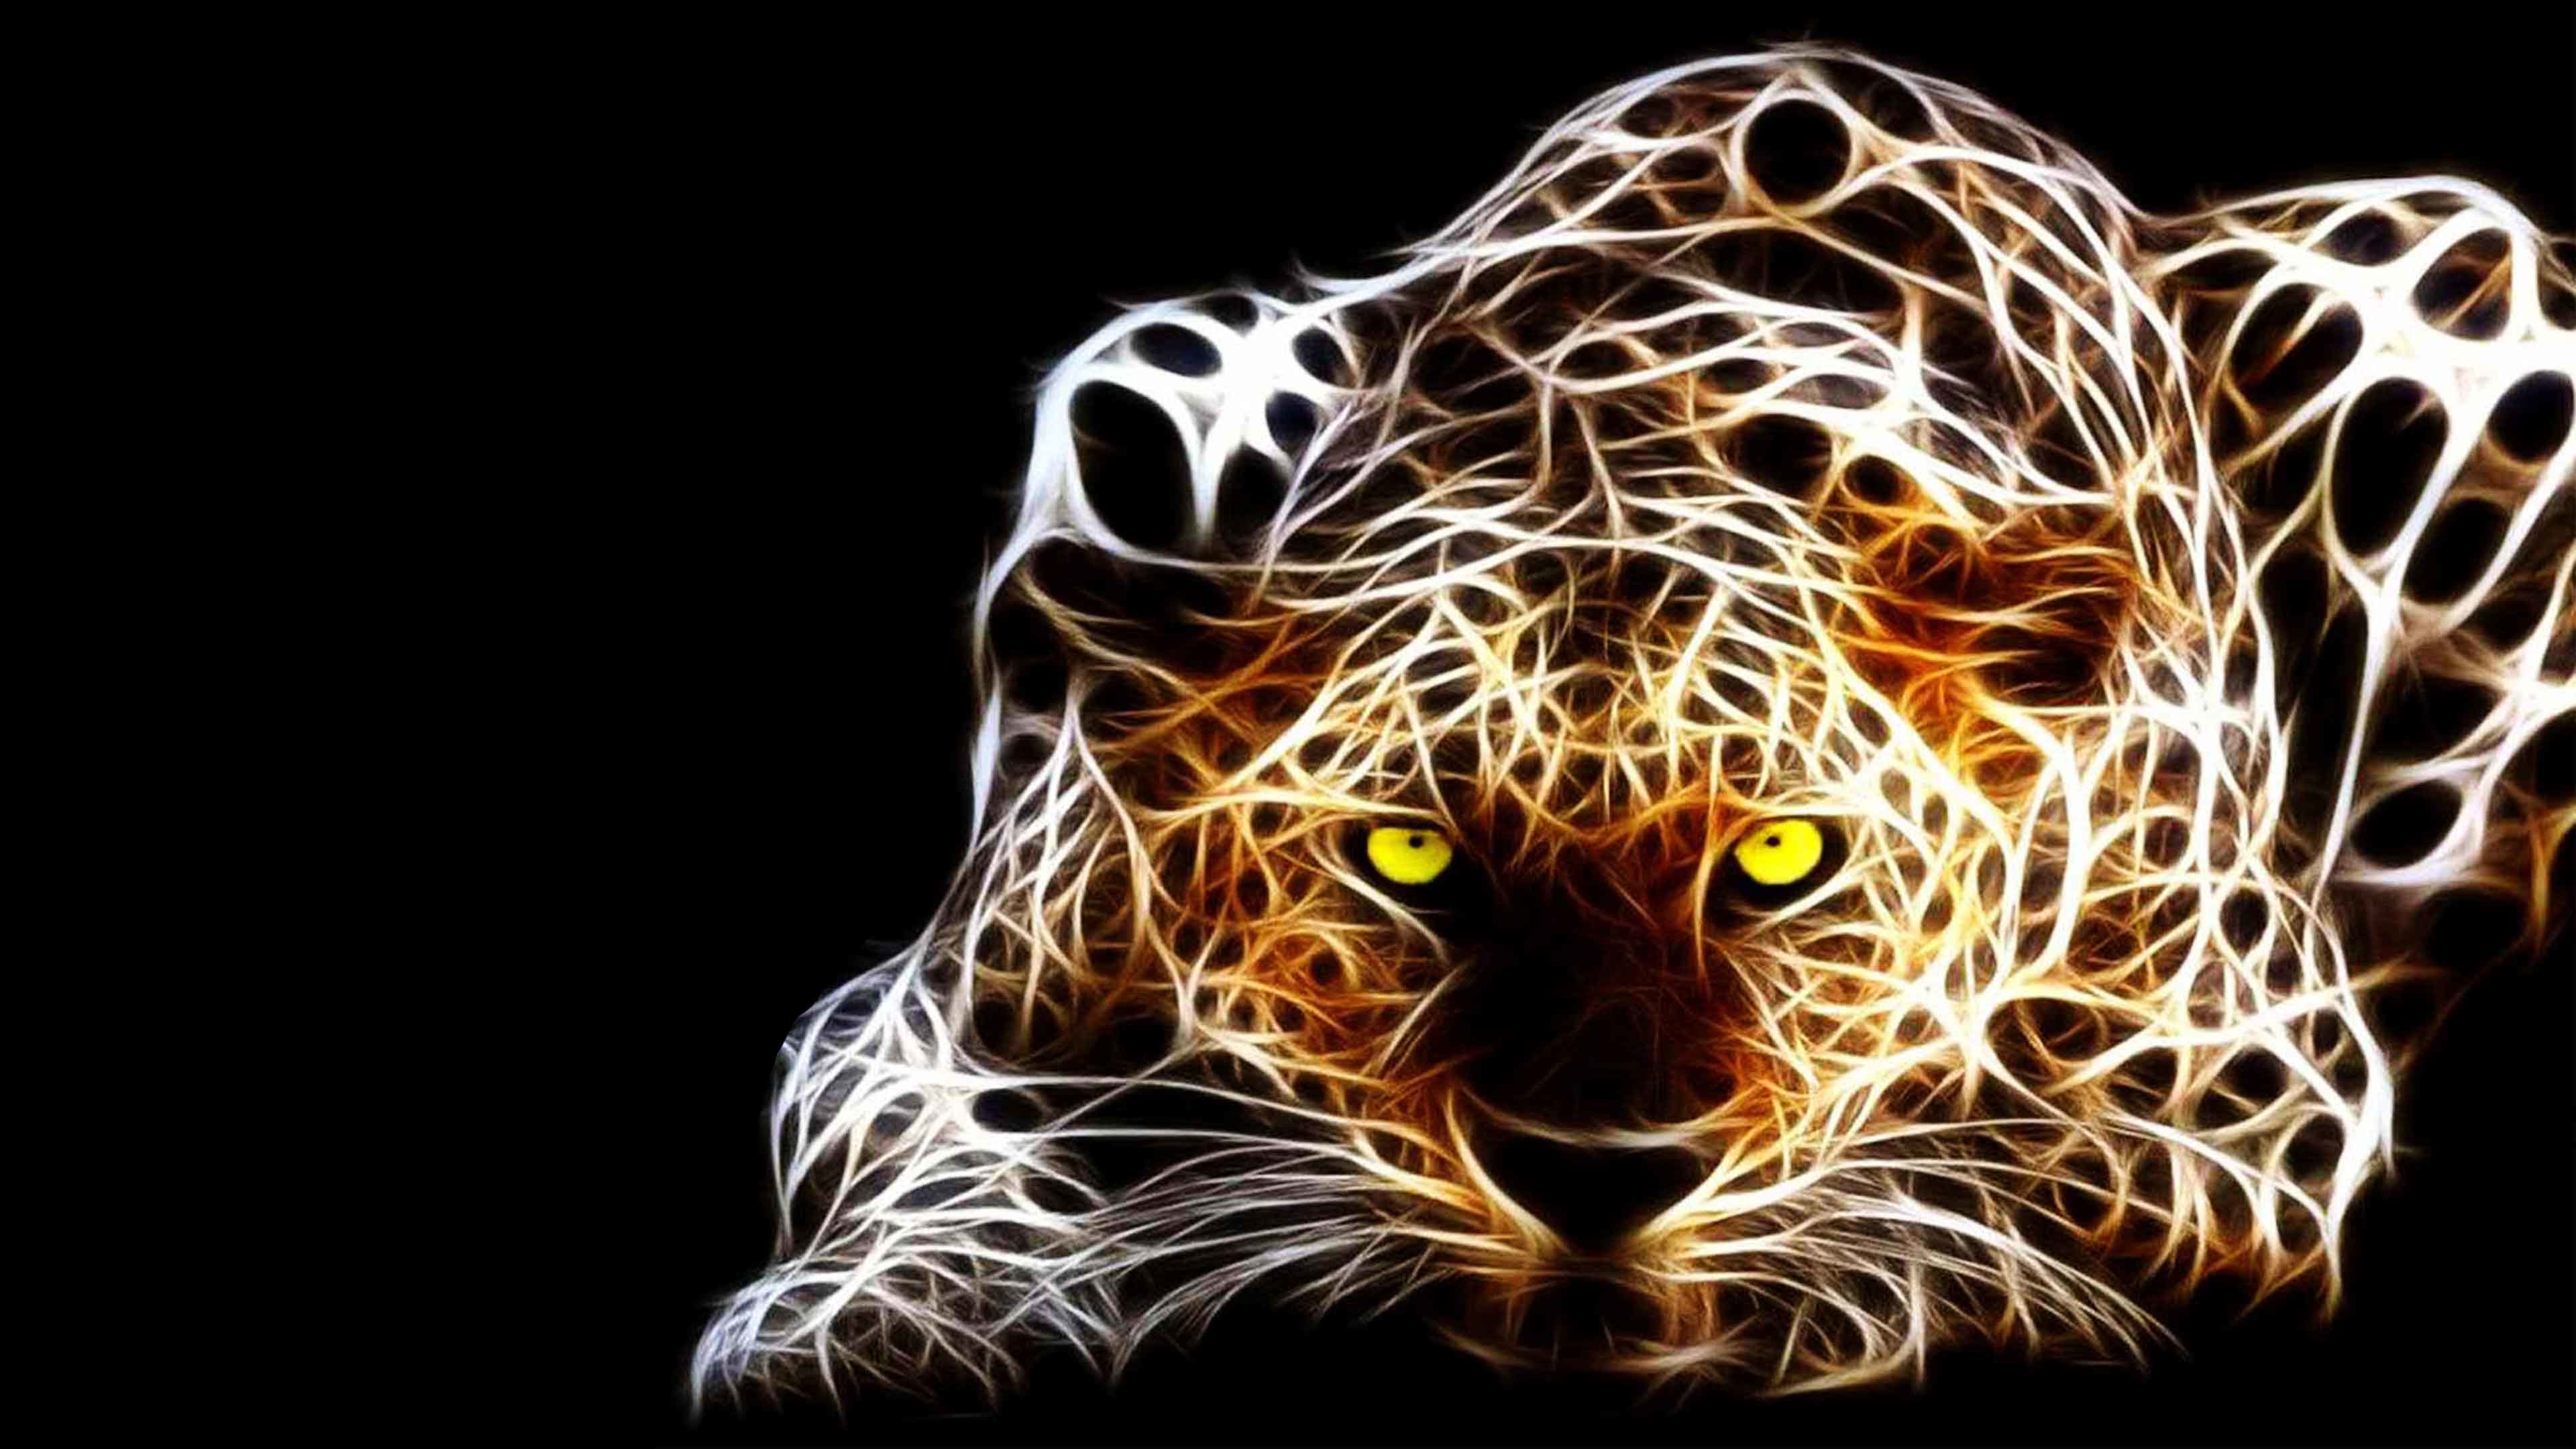 3840x2160, Animated Tiger Wallpapers - Neon Animal Wallpaper Hd - HD Wallpaper 